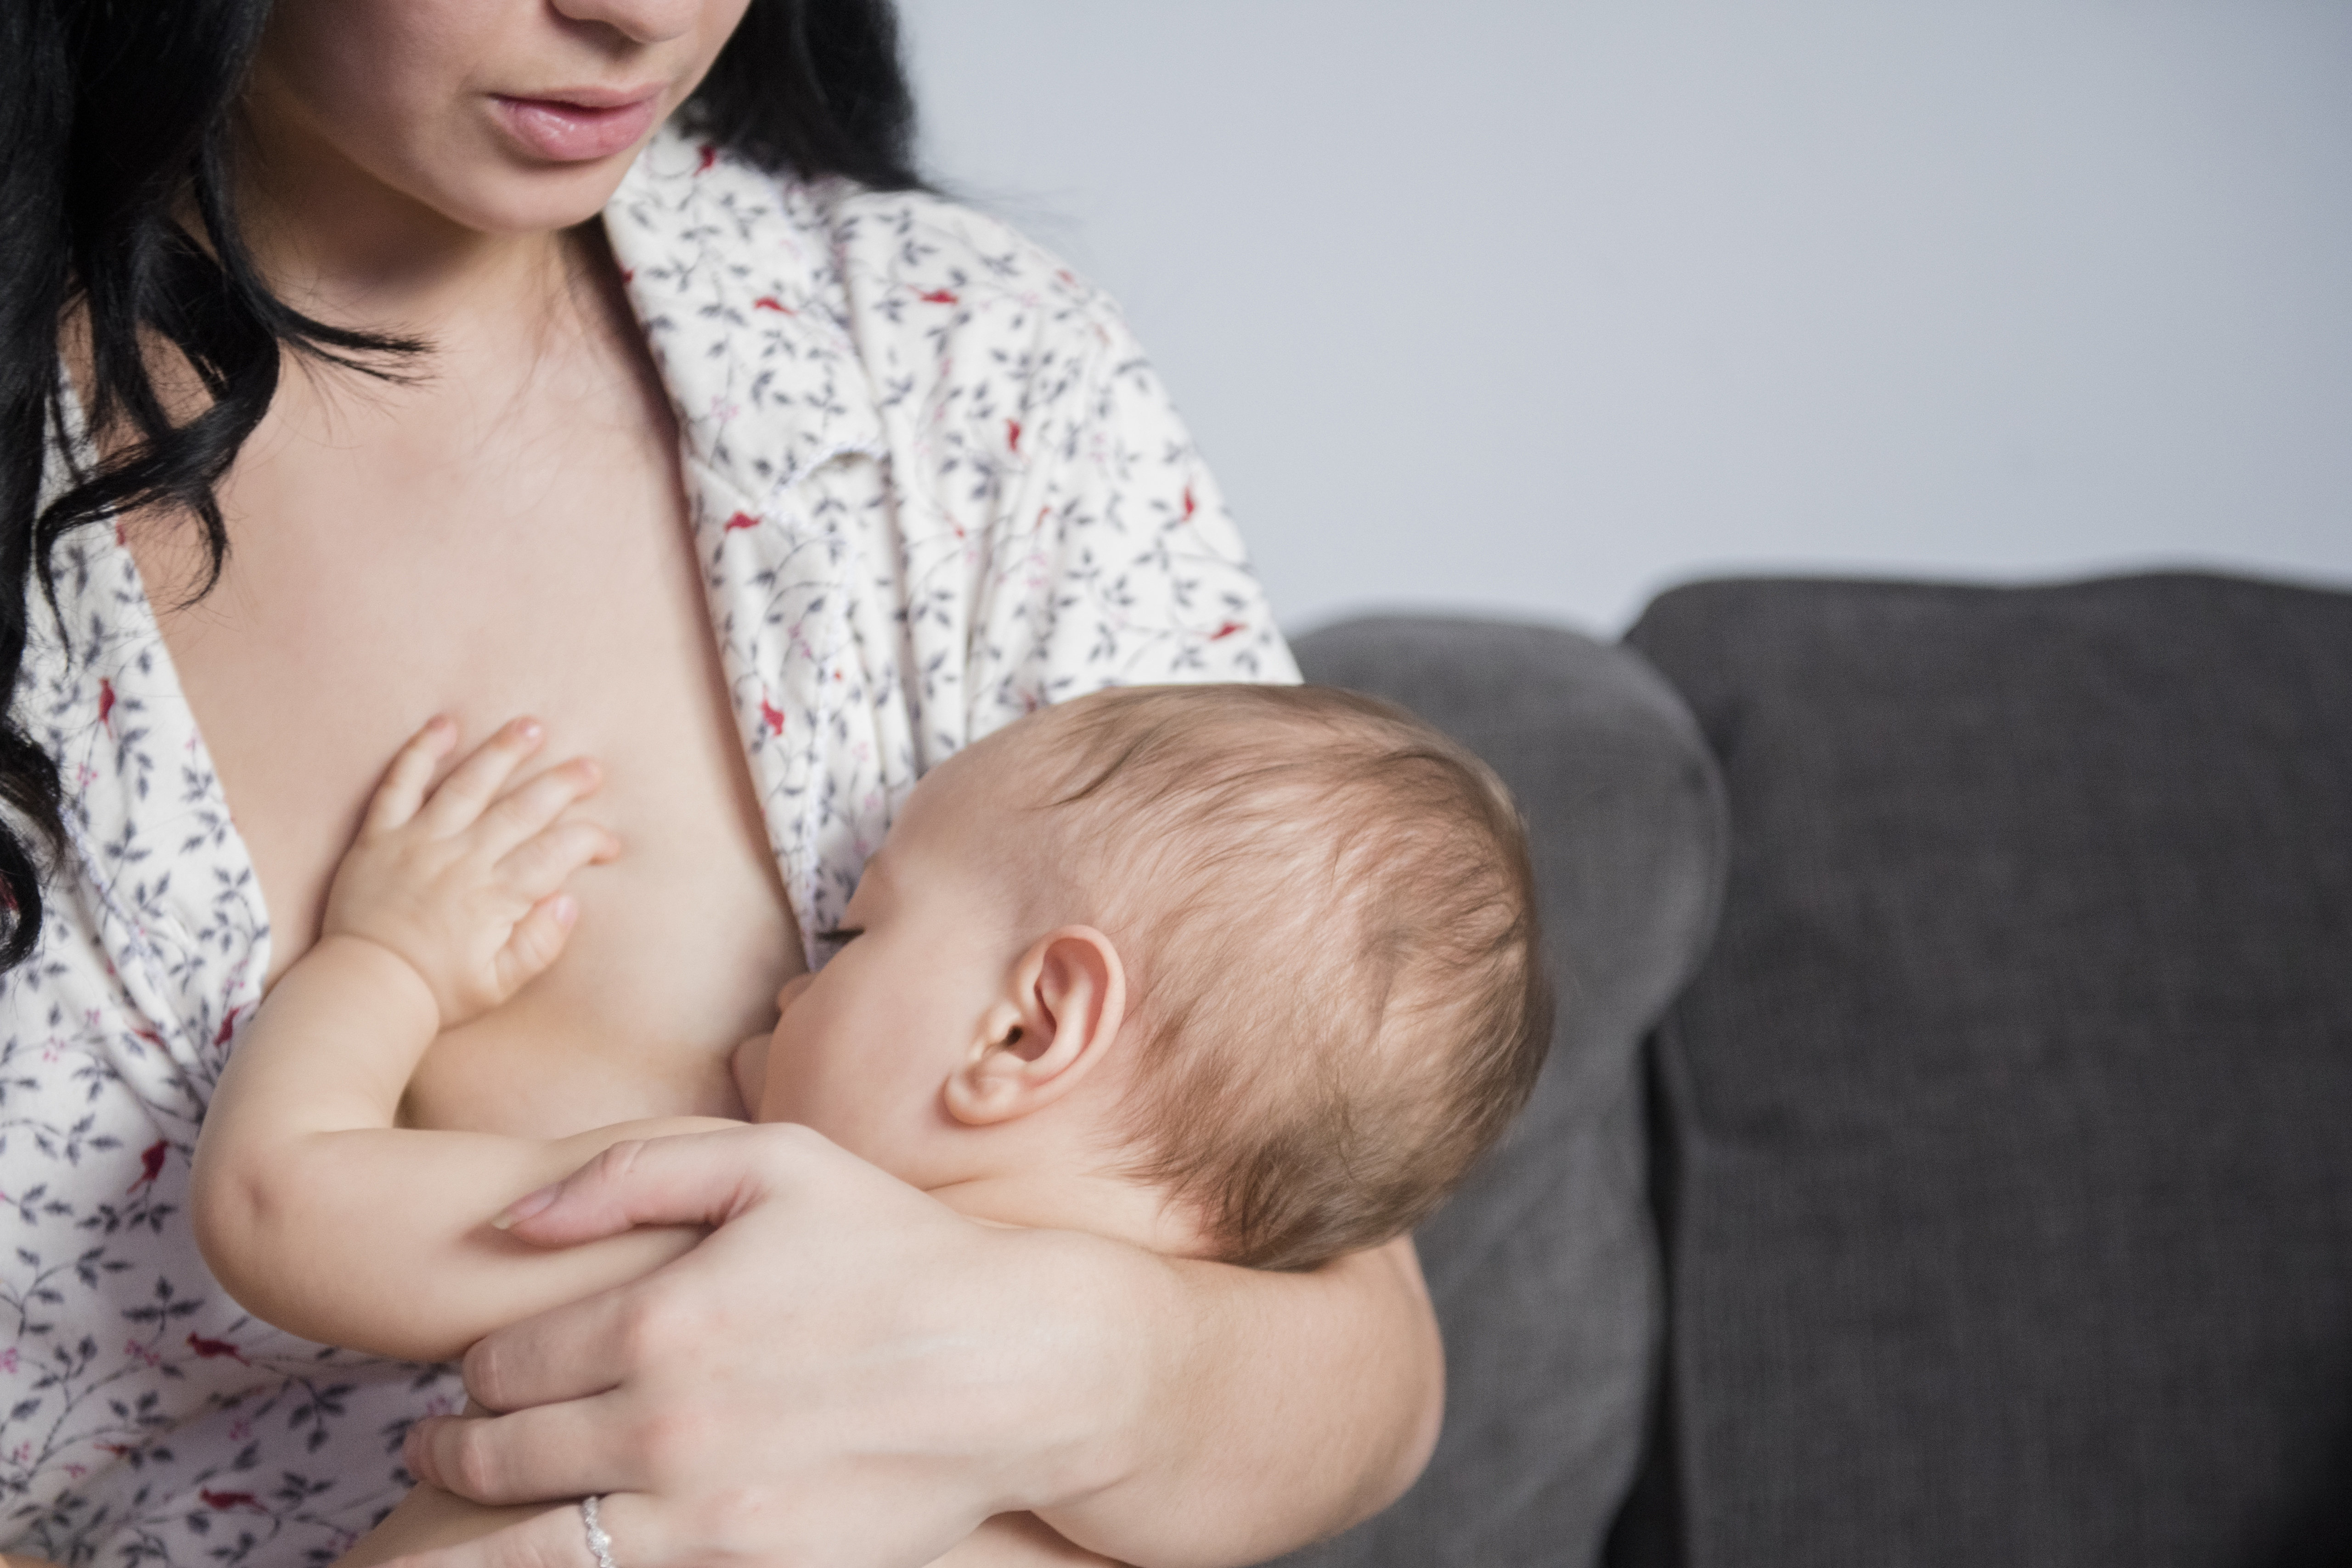 Ignorance and breastfeeding beliefs threaten 70% of newborns in Nigeria